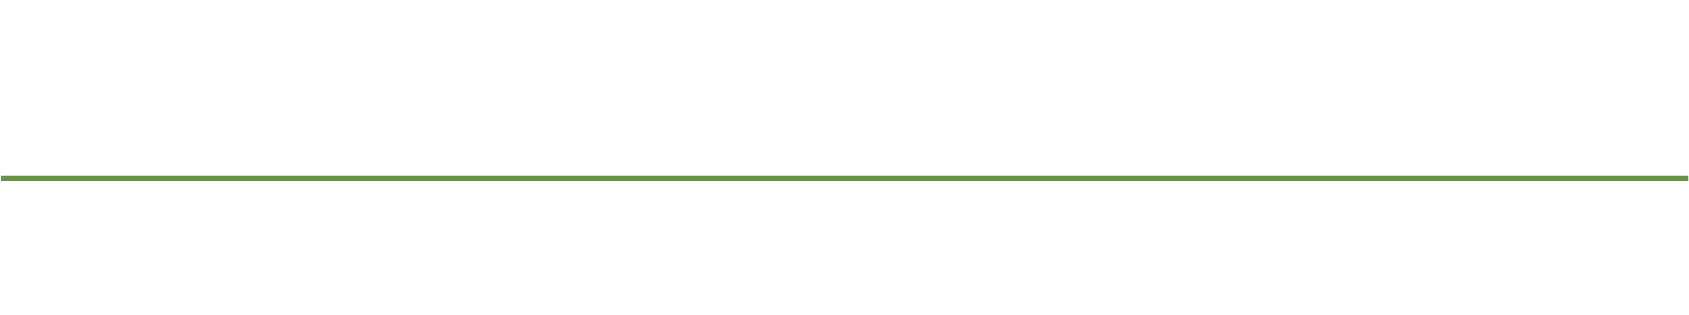 Greater Niles Chamber of Commerce logo